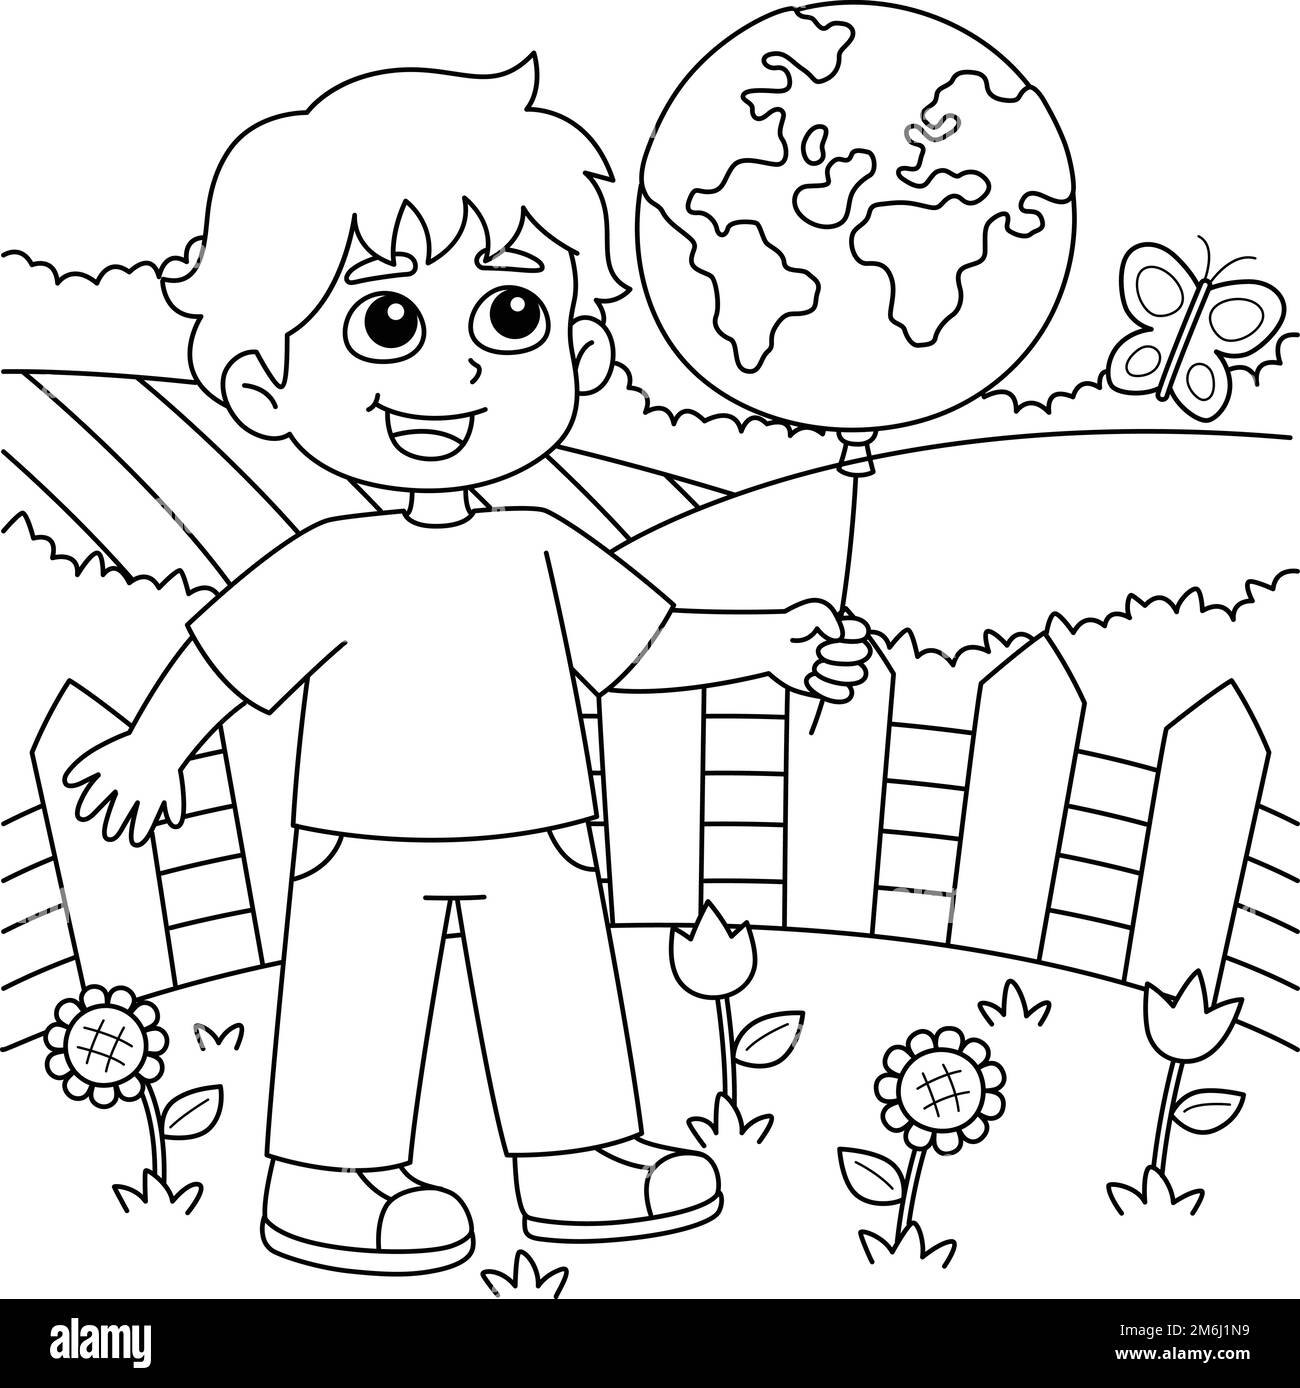 Boy Holding an Earth Balloon Coloring Page  Stock Vector